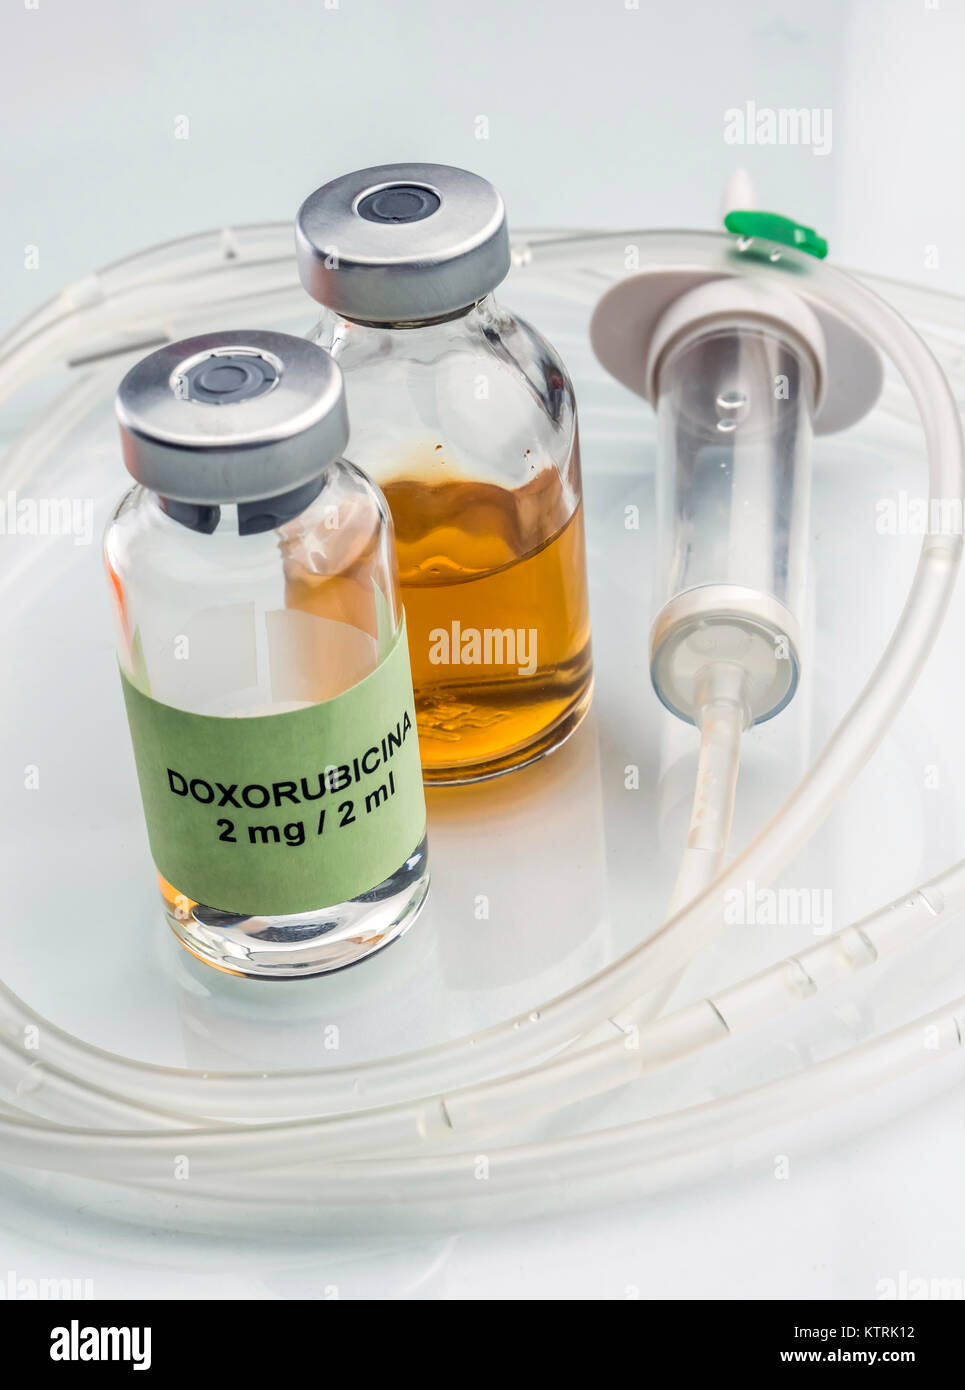 Doxorubicin Vial with drip irrigation, medicine used for acute lymphatic leukemia disease, conceptual image Stock Photo